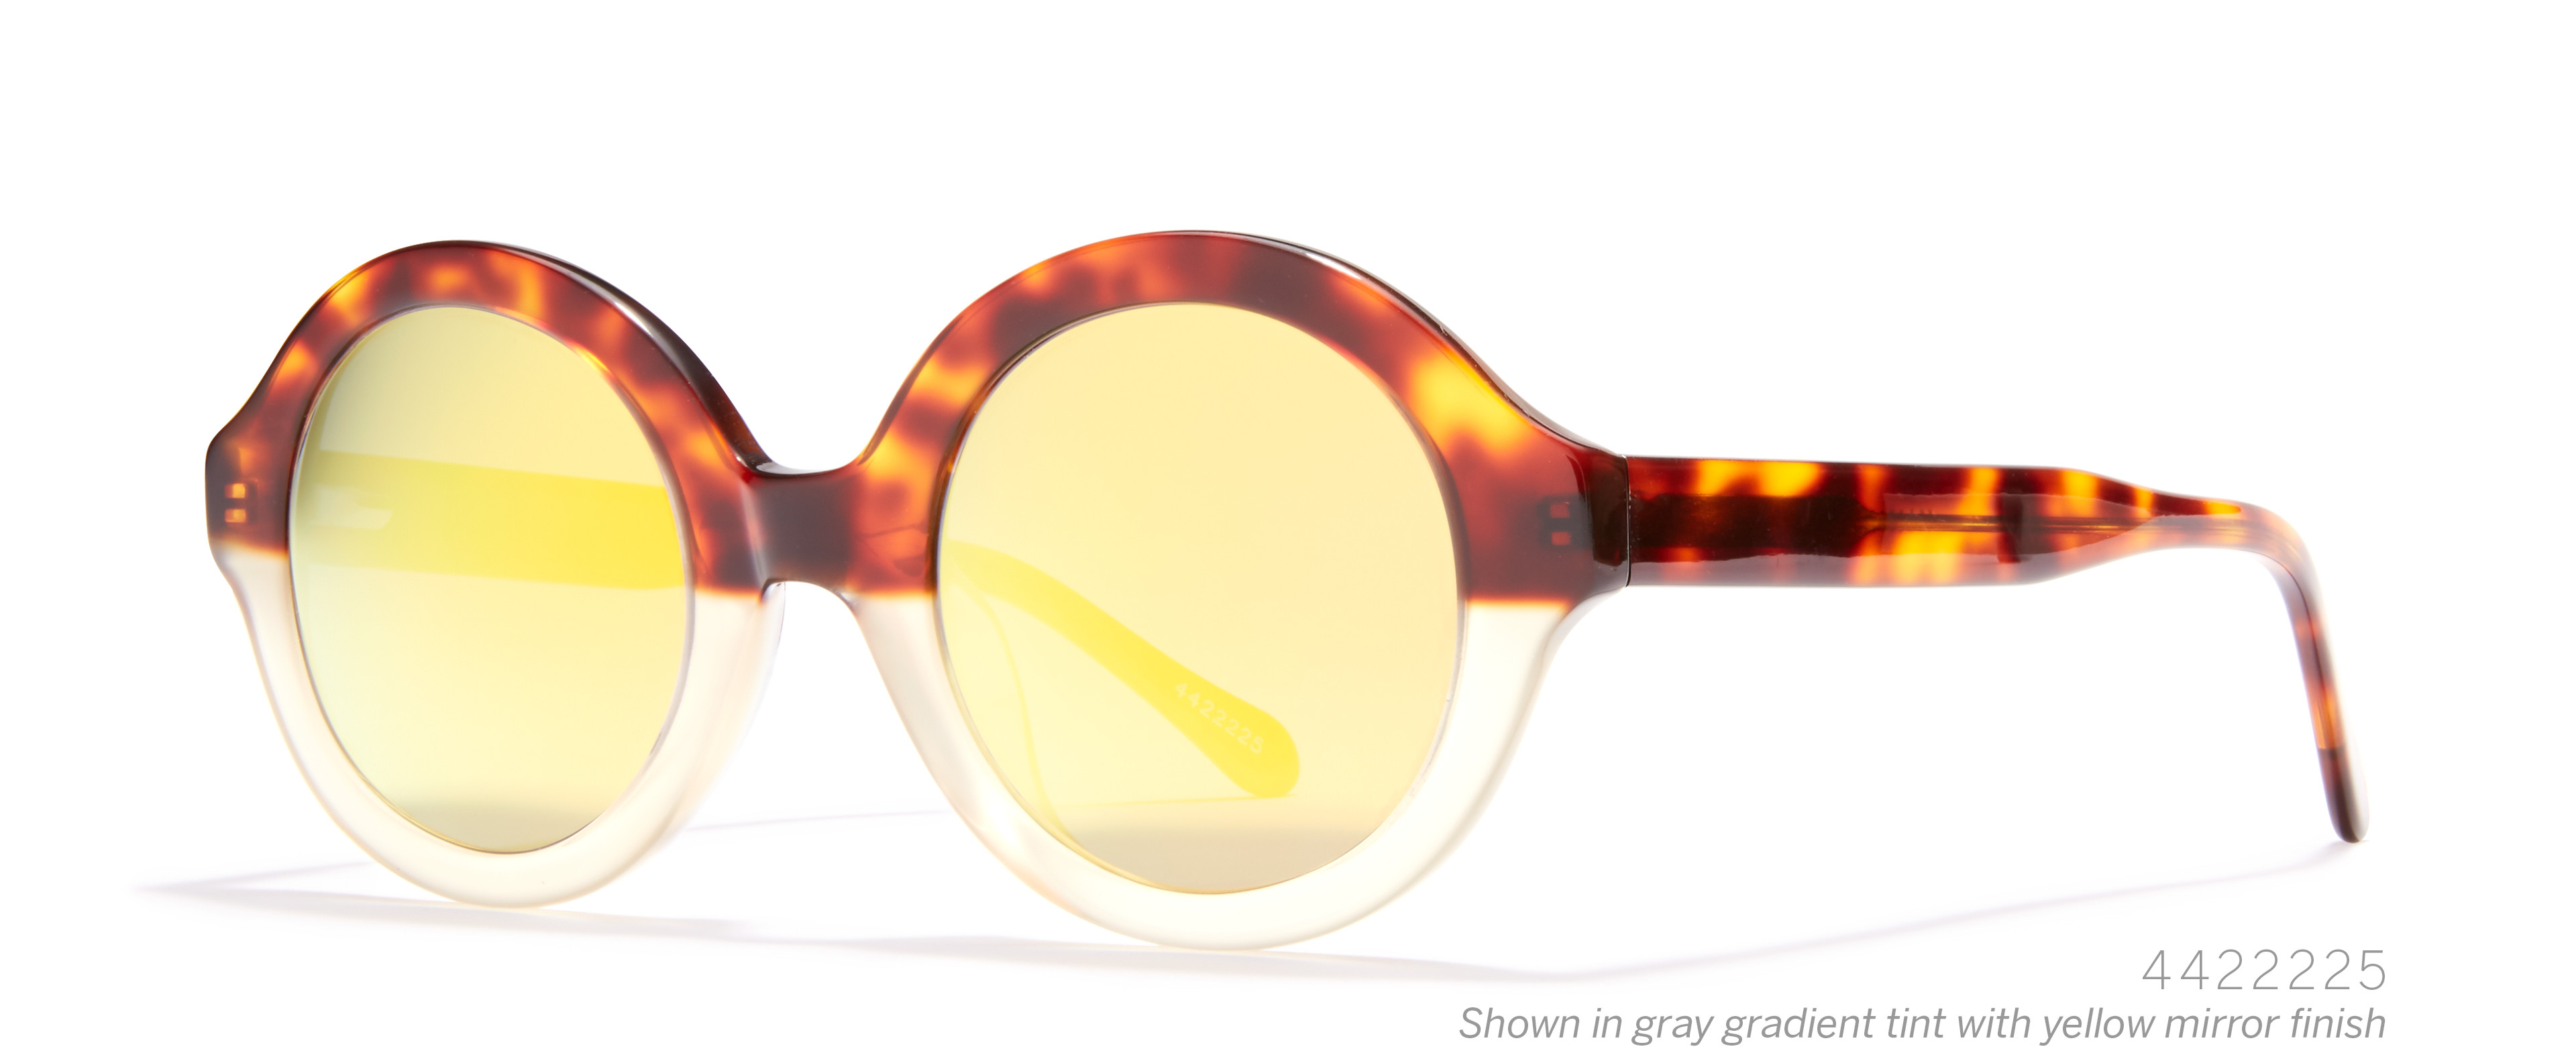 glasses as fashion statement